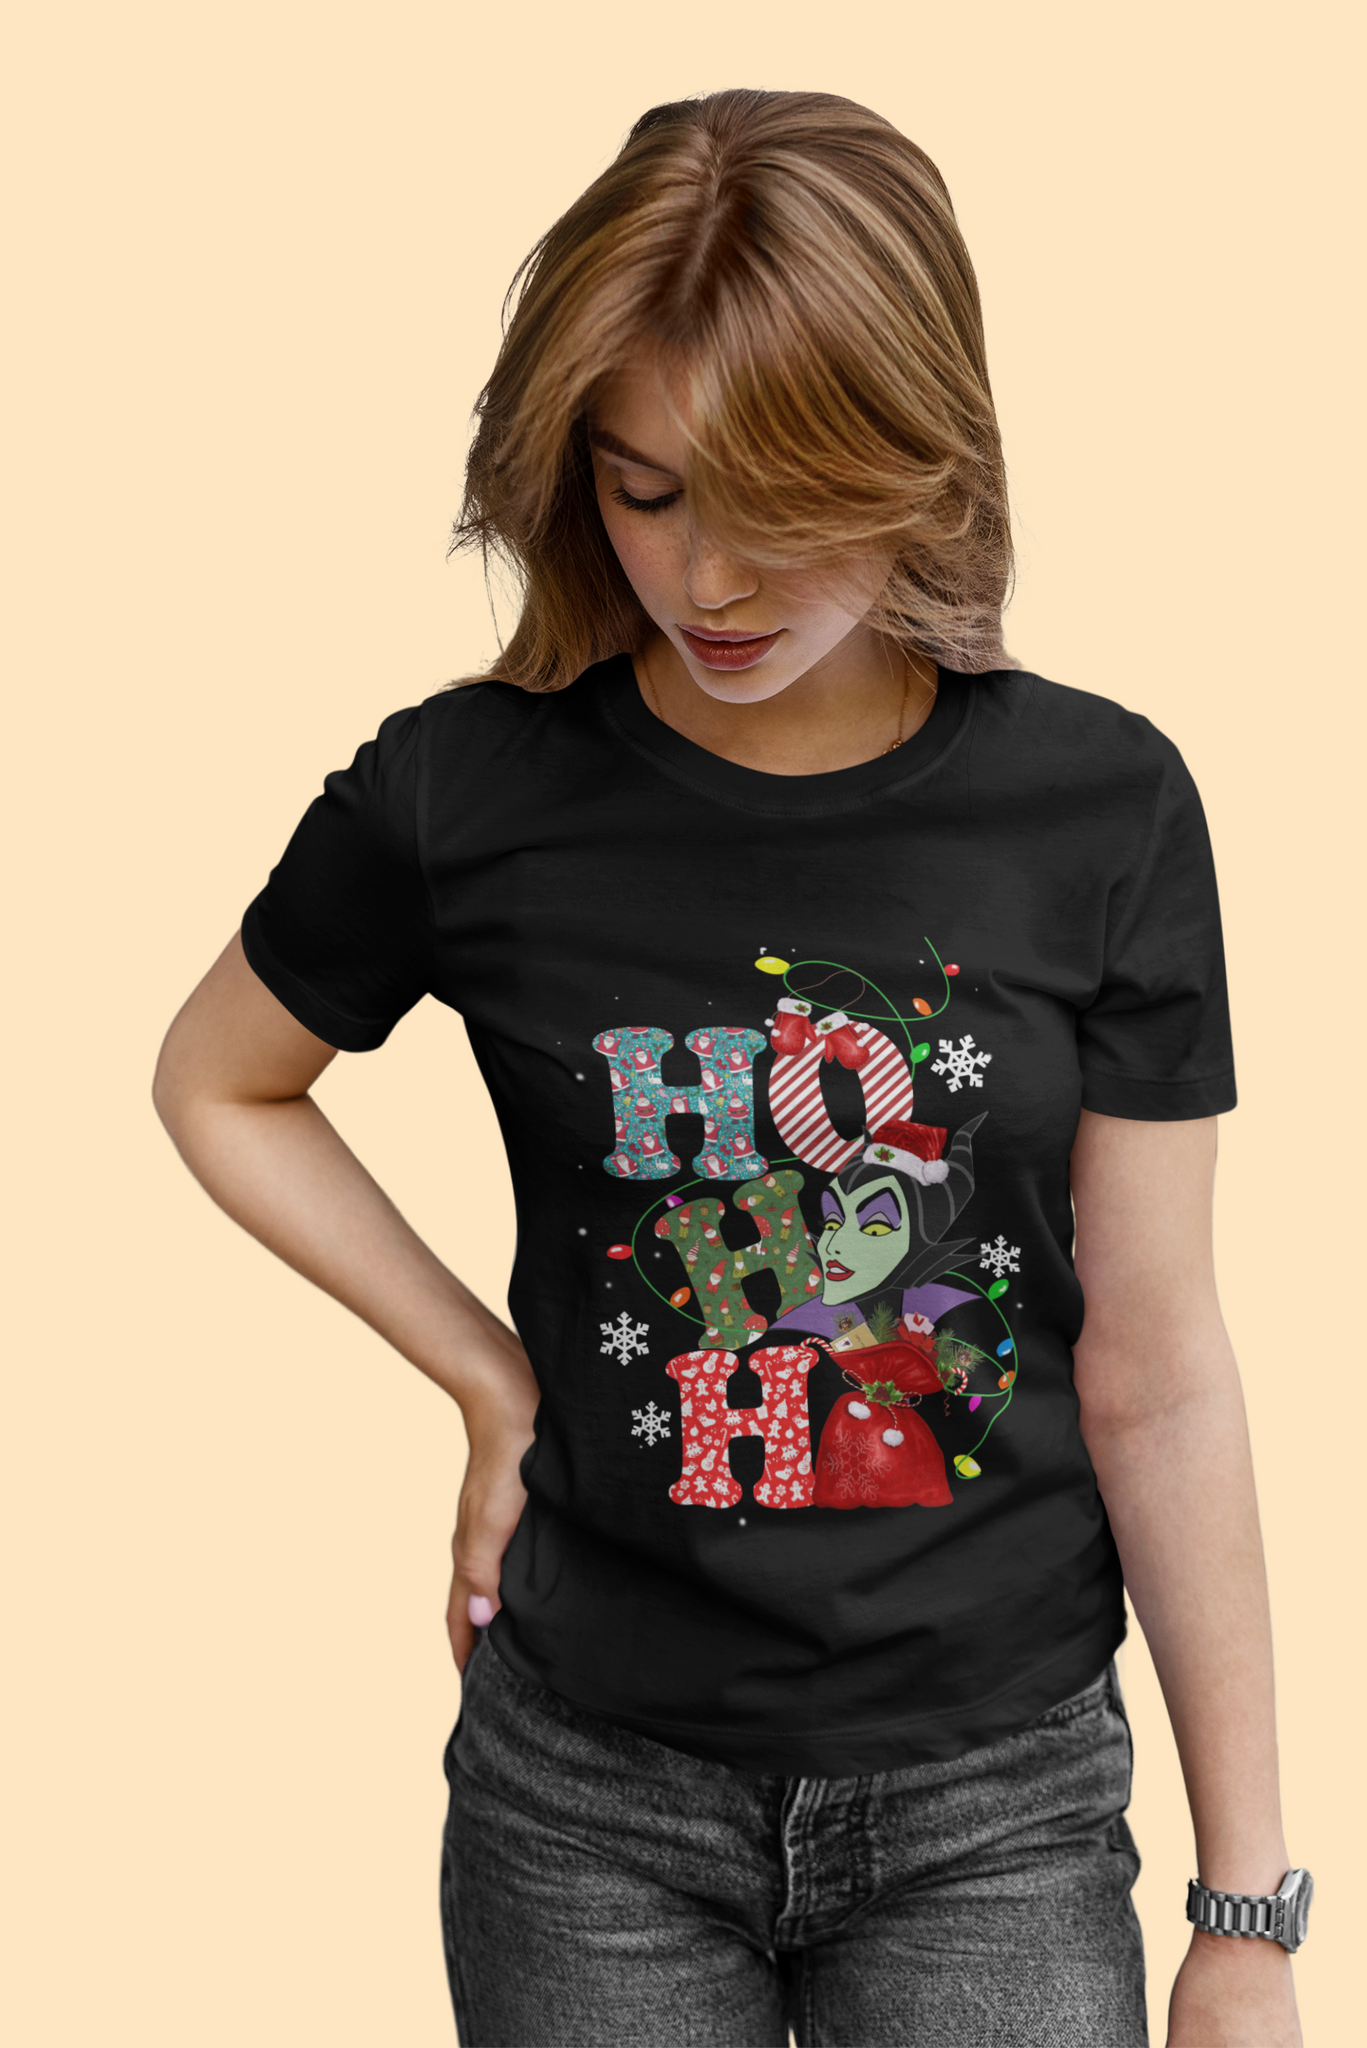 Disney Maleficent T Shirt, Ho Ho Ho Tshirt, Disney Villains Shirt, Christmas Gifts